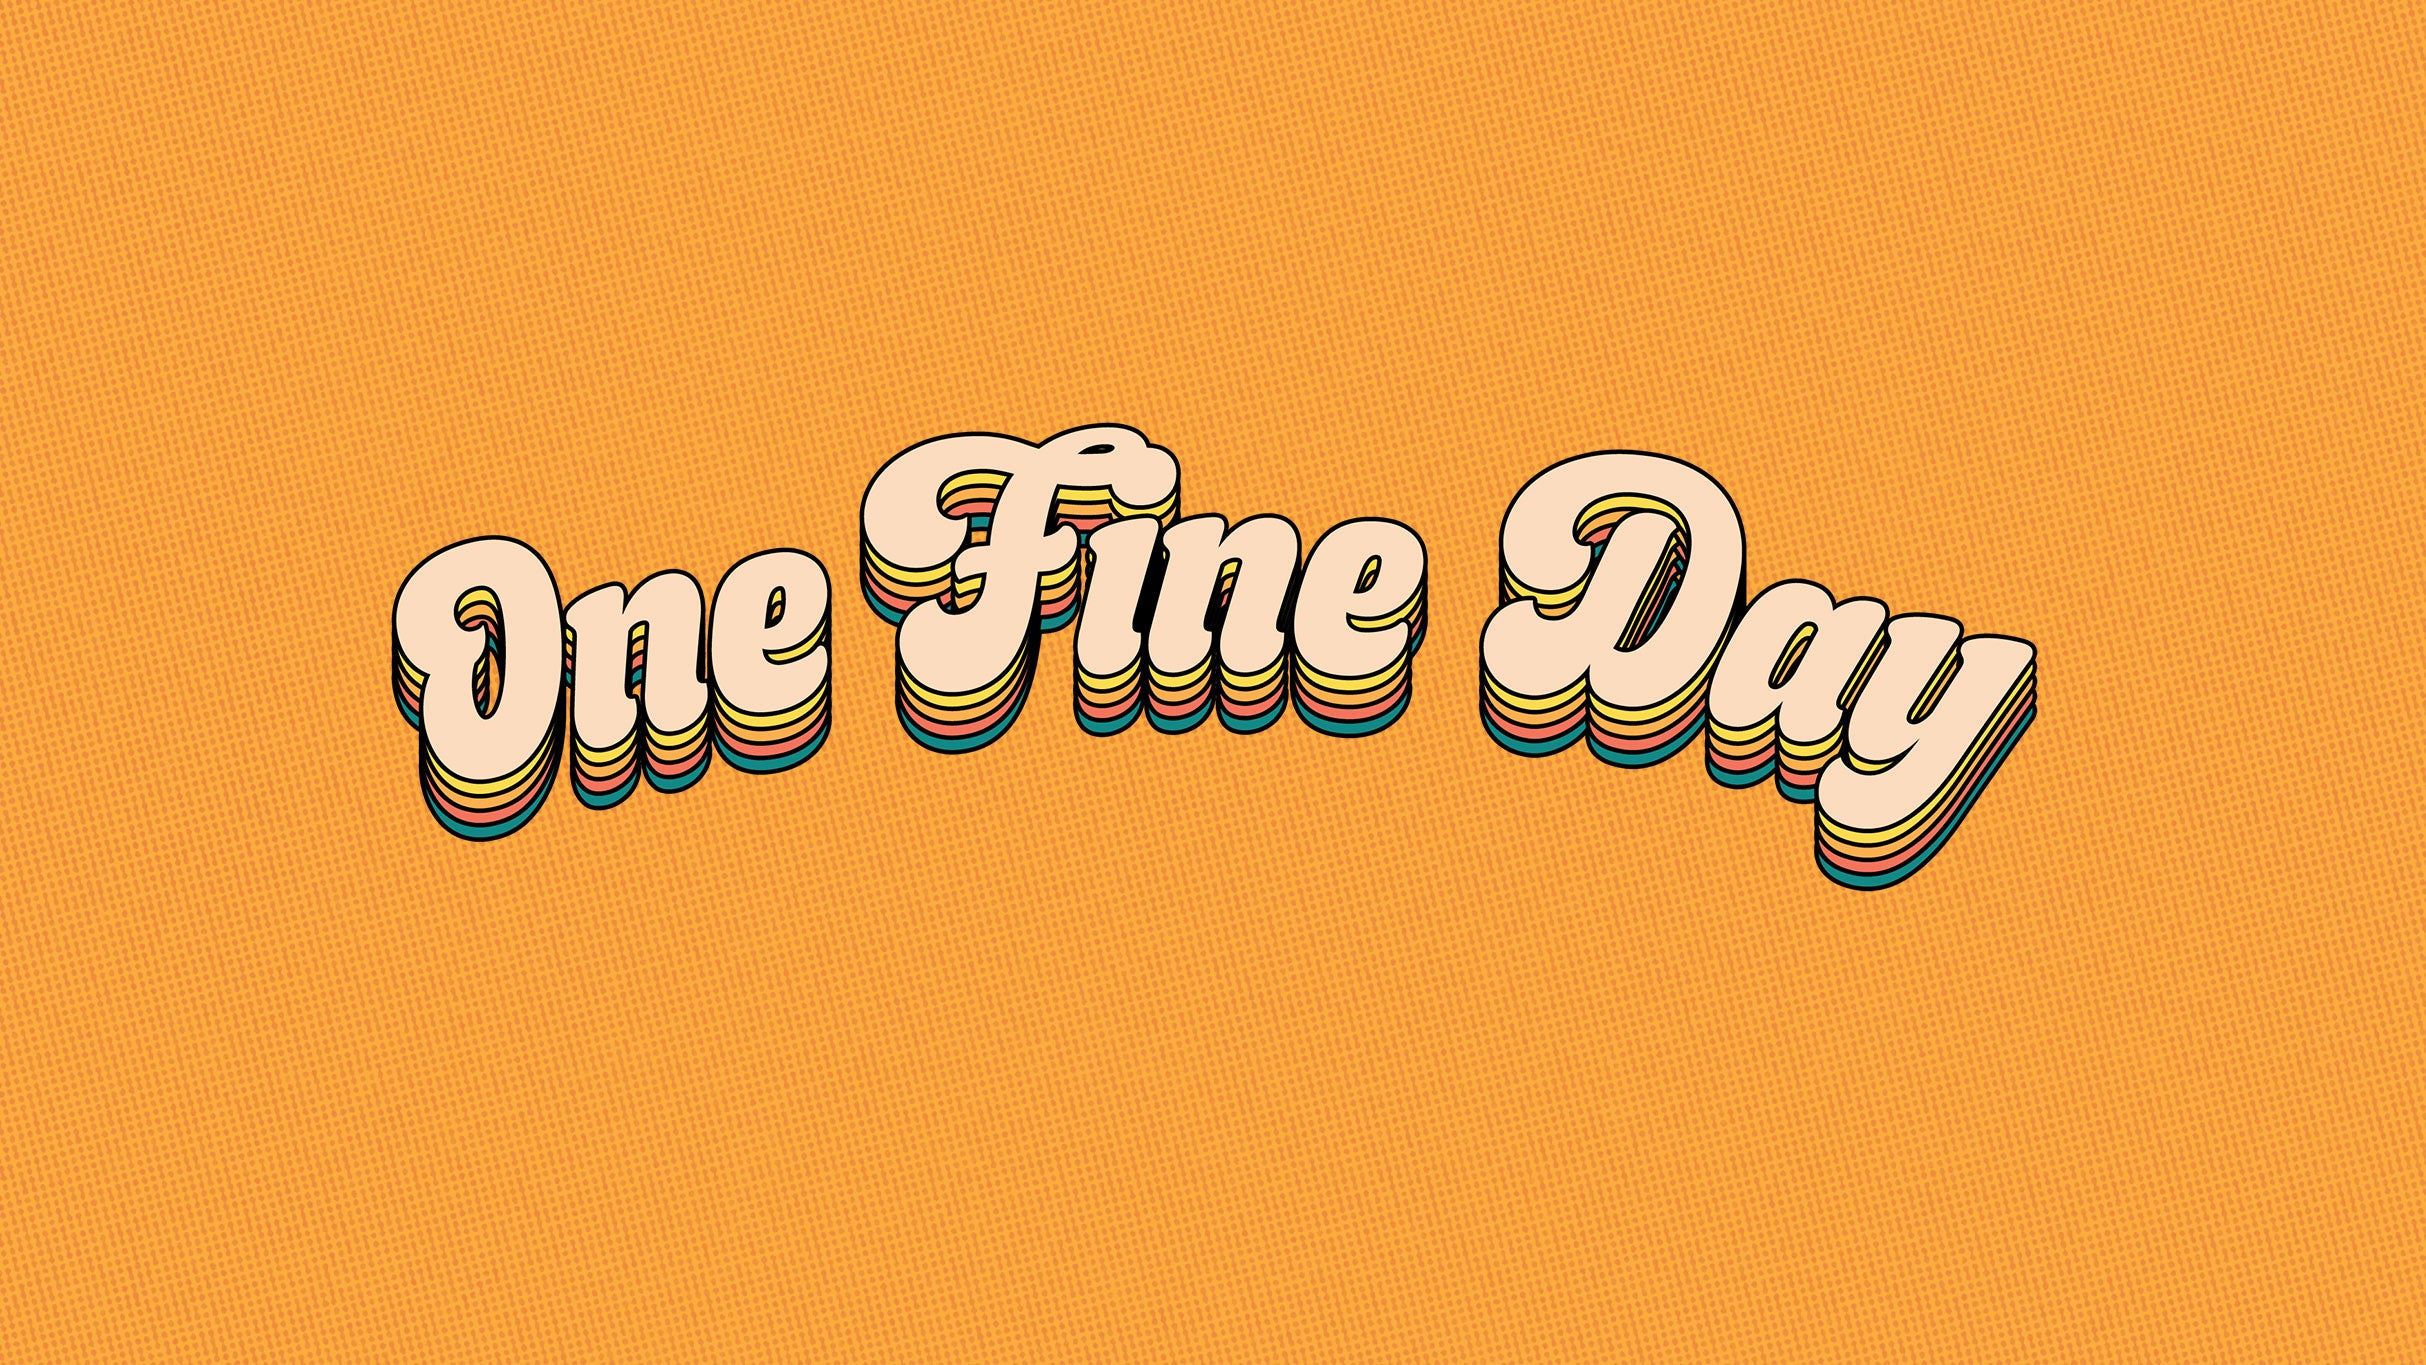 One Fine Day Festival - Featuring Sting, Shaggy, Thundercat & More in Philadelphia promo photo for Rakuten Summer's Live 4 Pack presale offer code